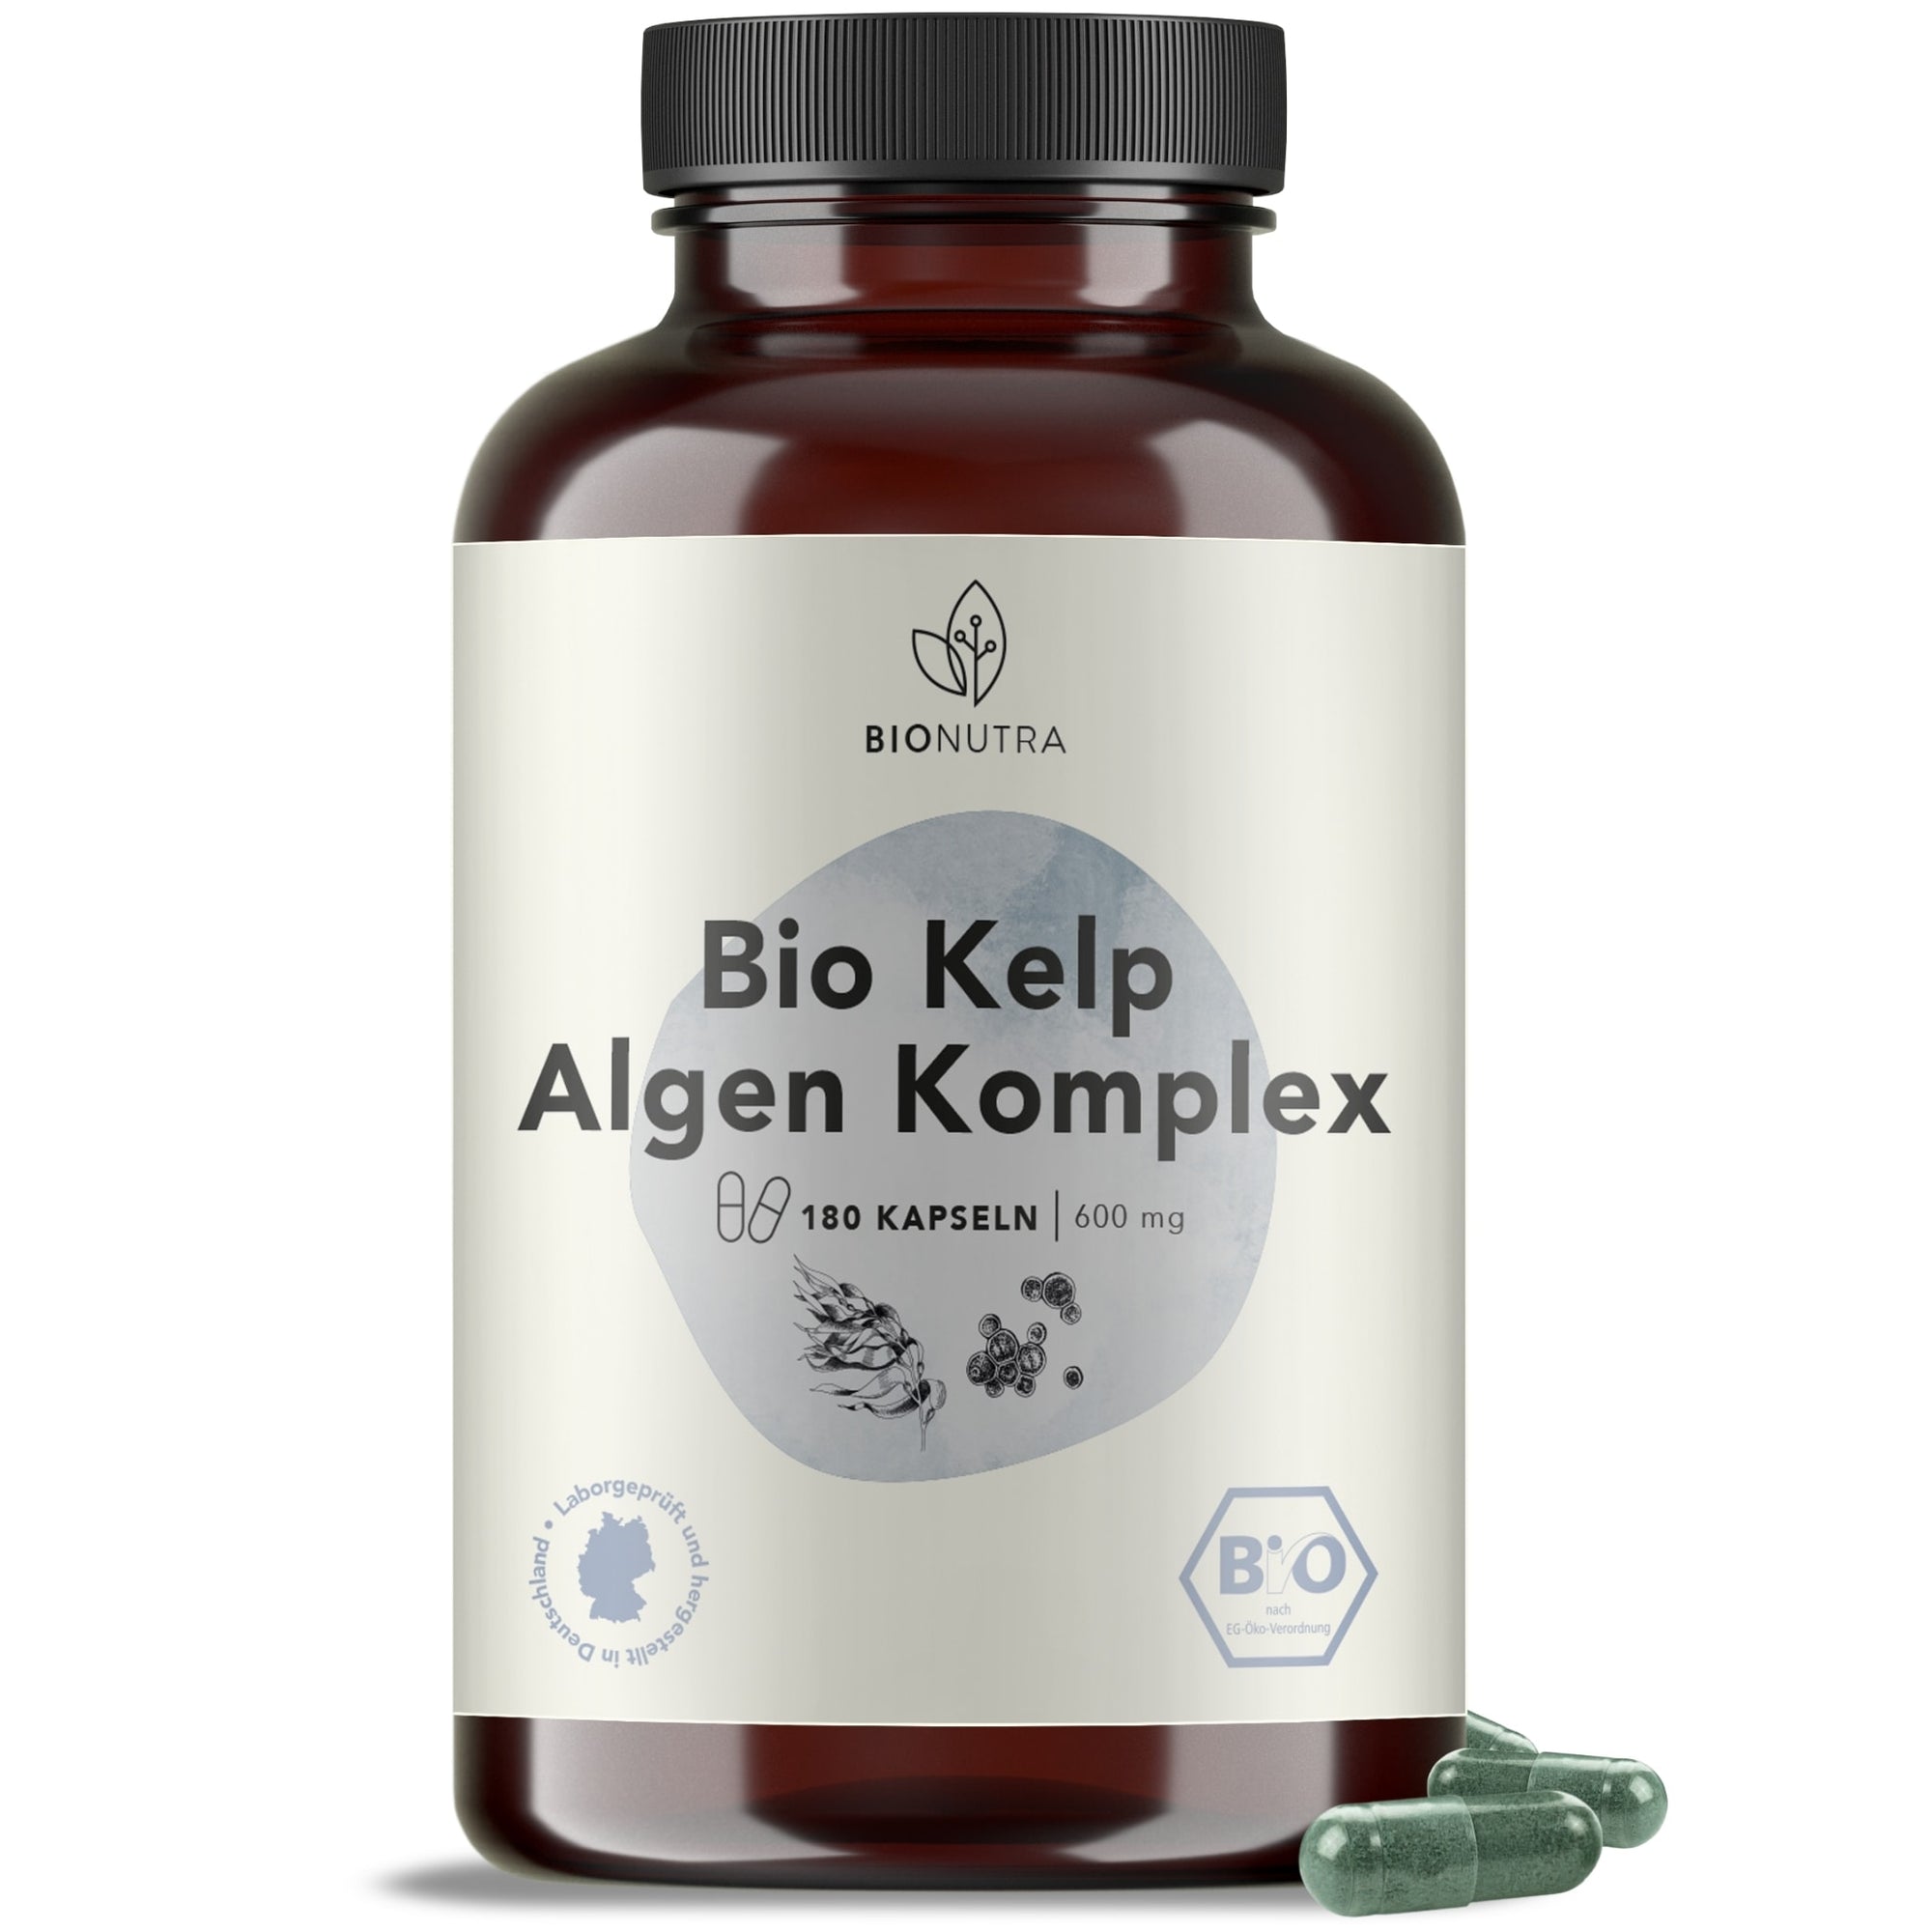 Bio Kelp Algen Komplex Kapseln 600mg, 150 ug Jod, 180 kapseln